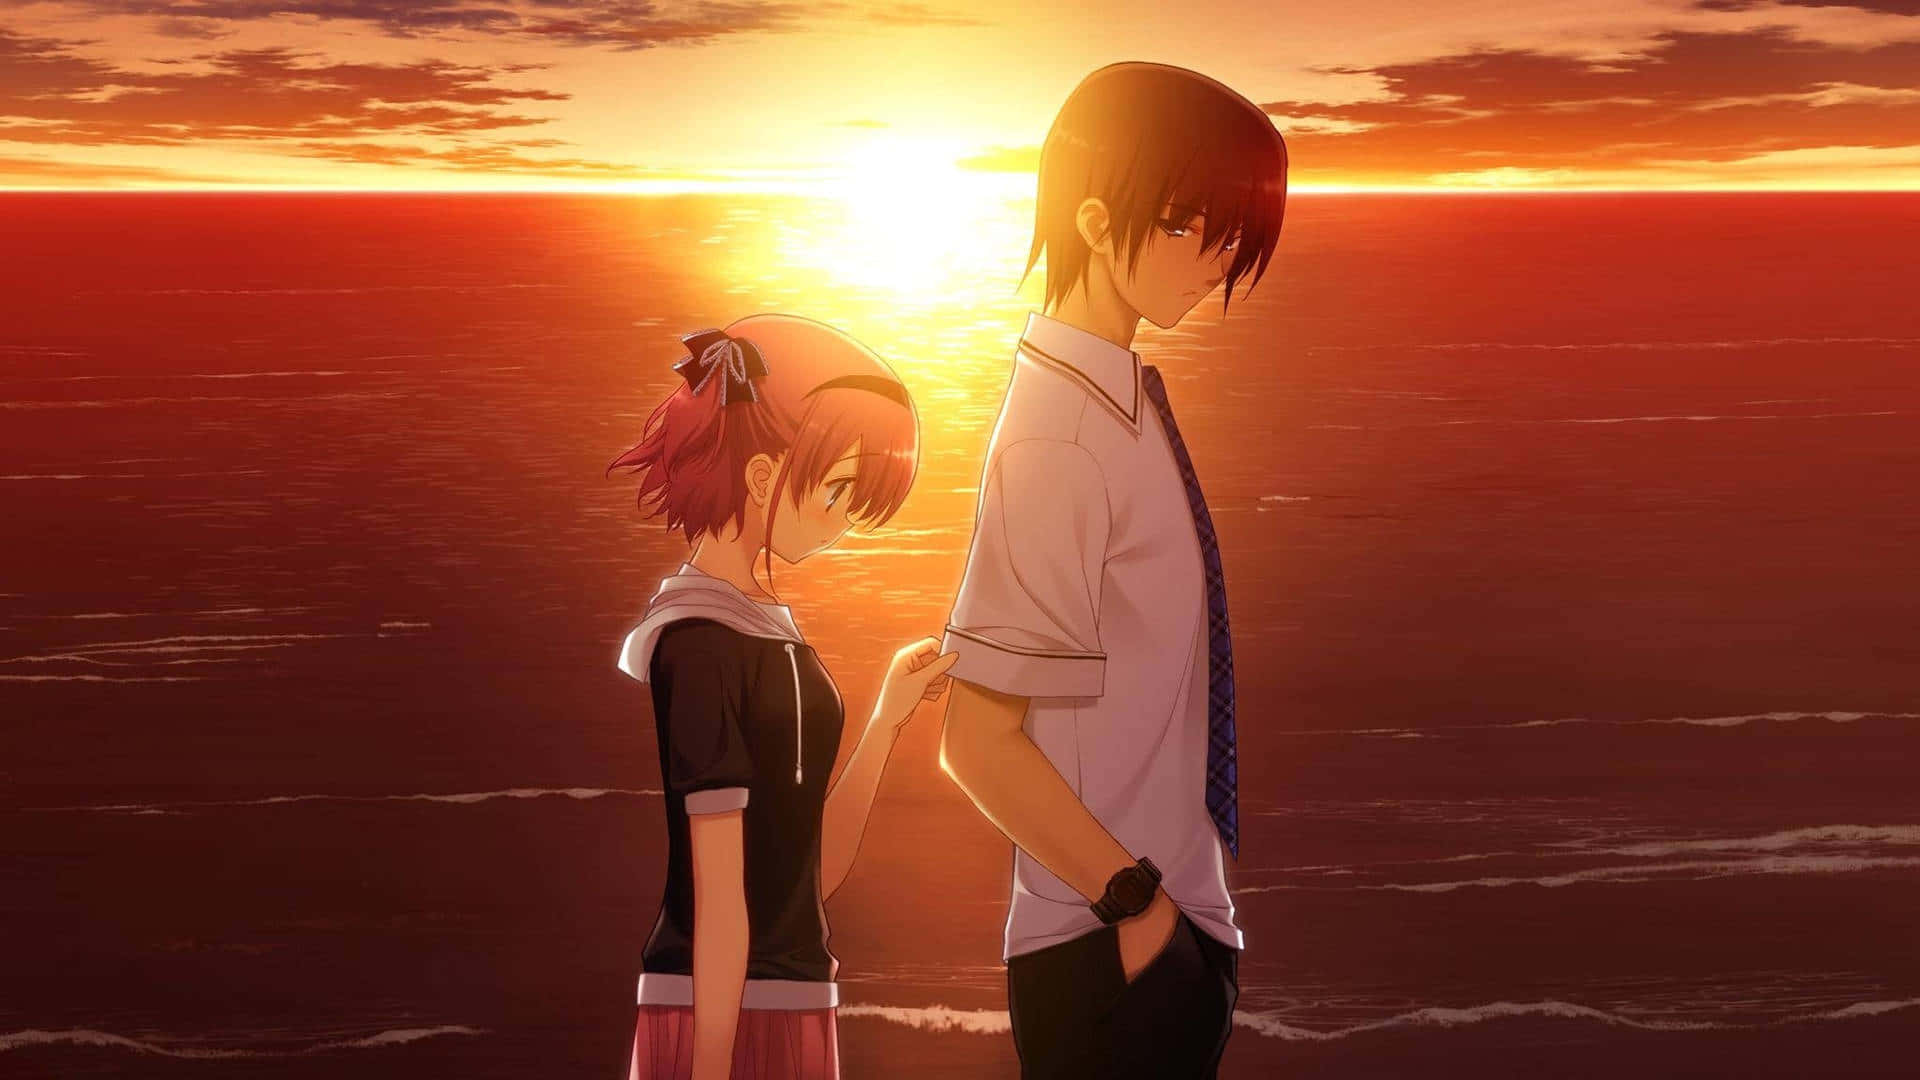 Sunset Anime Matching Couple Pfp Wallpaper